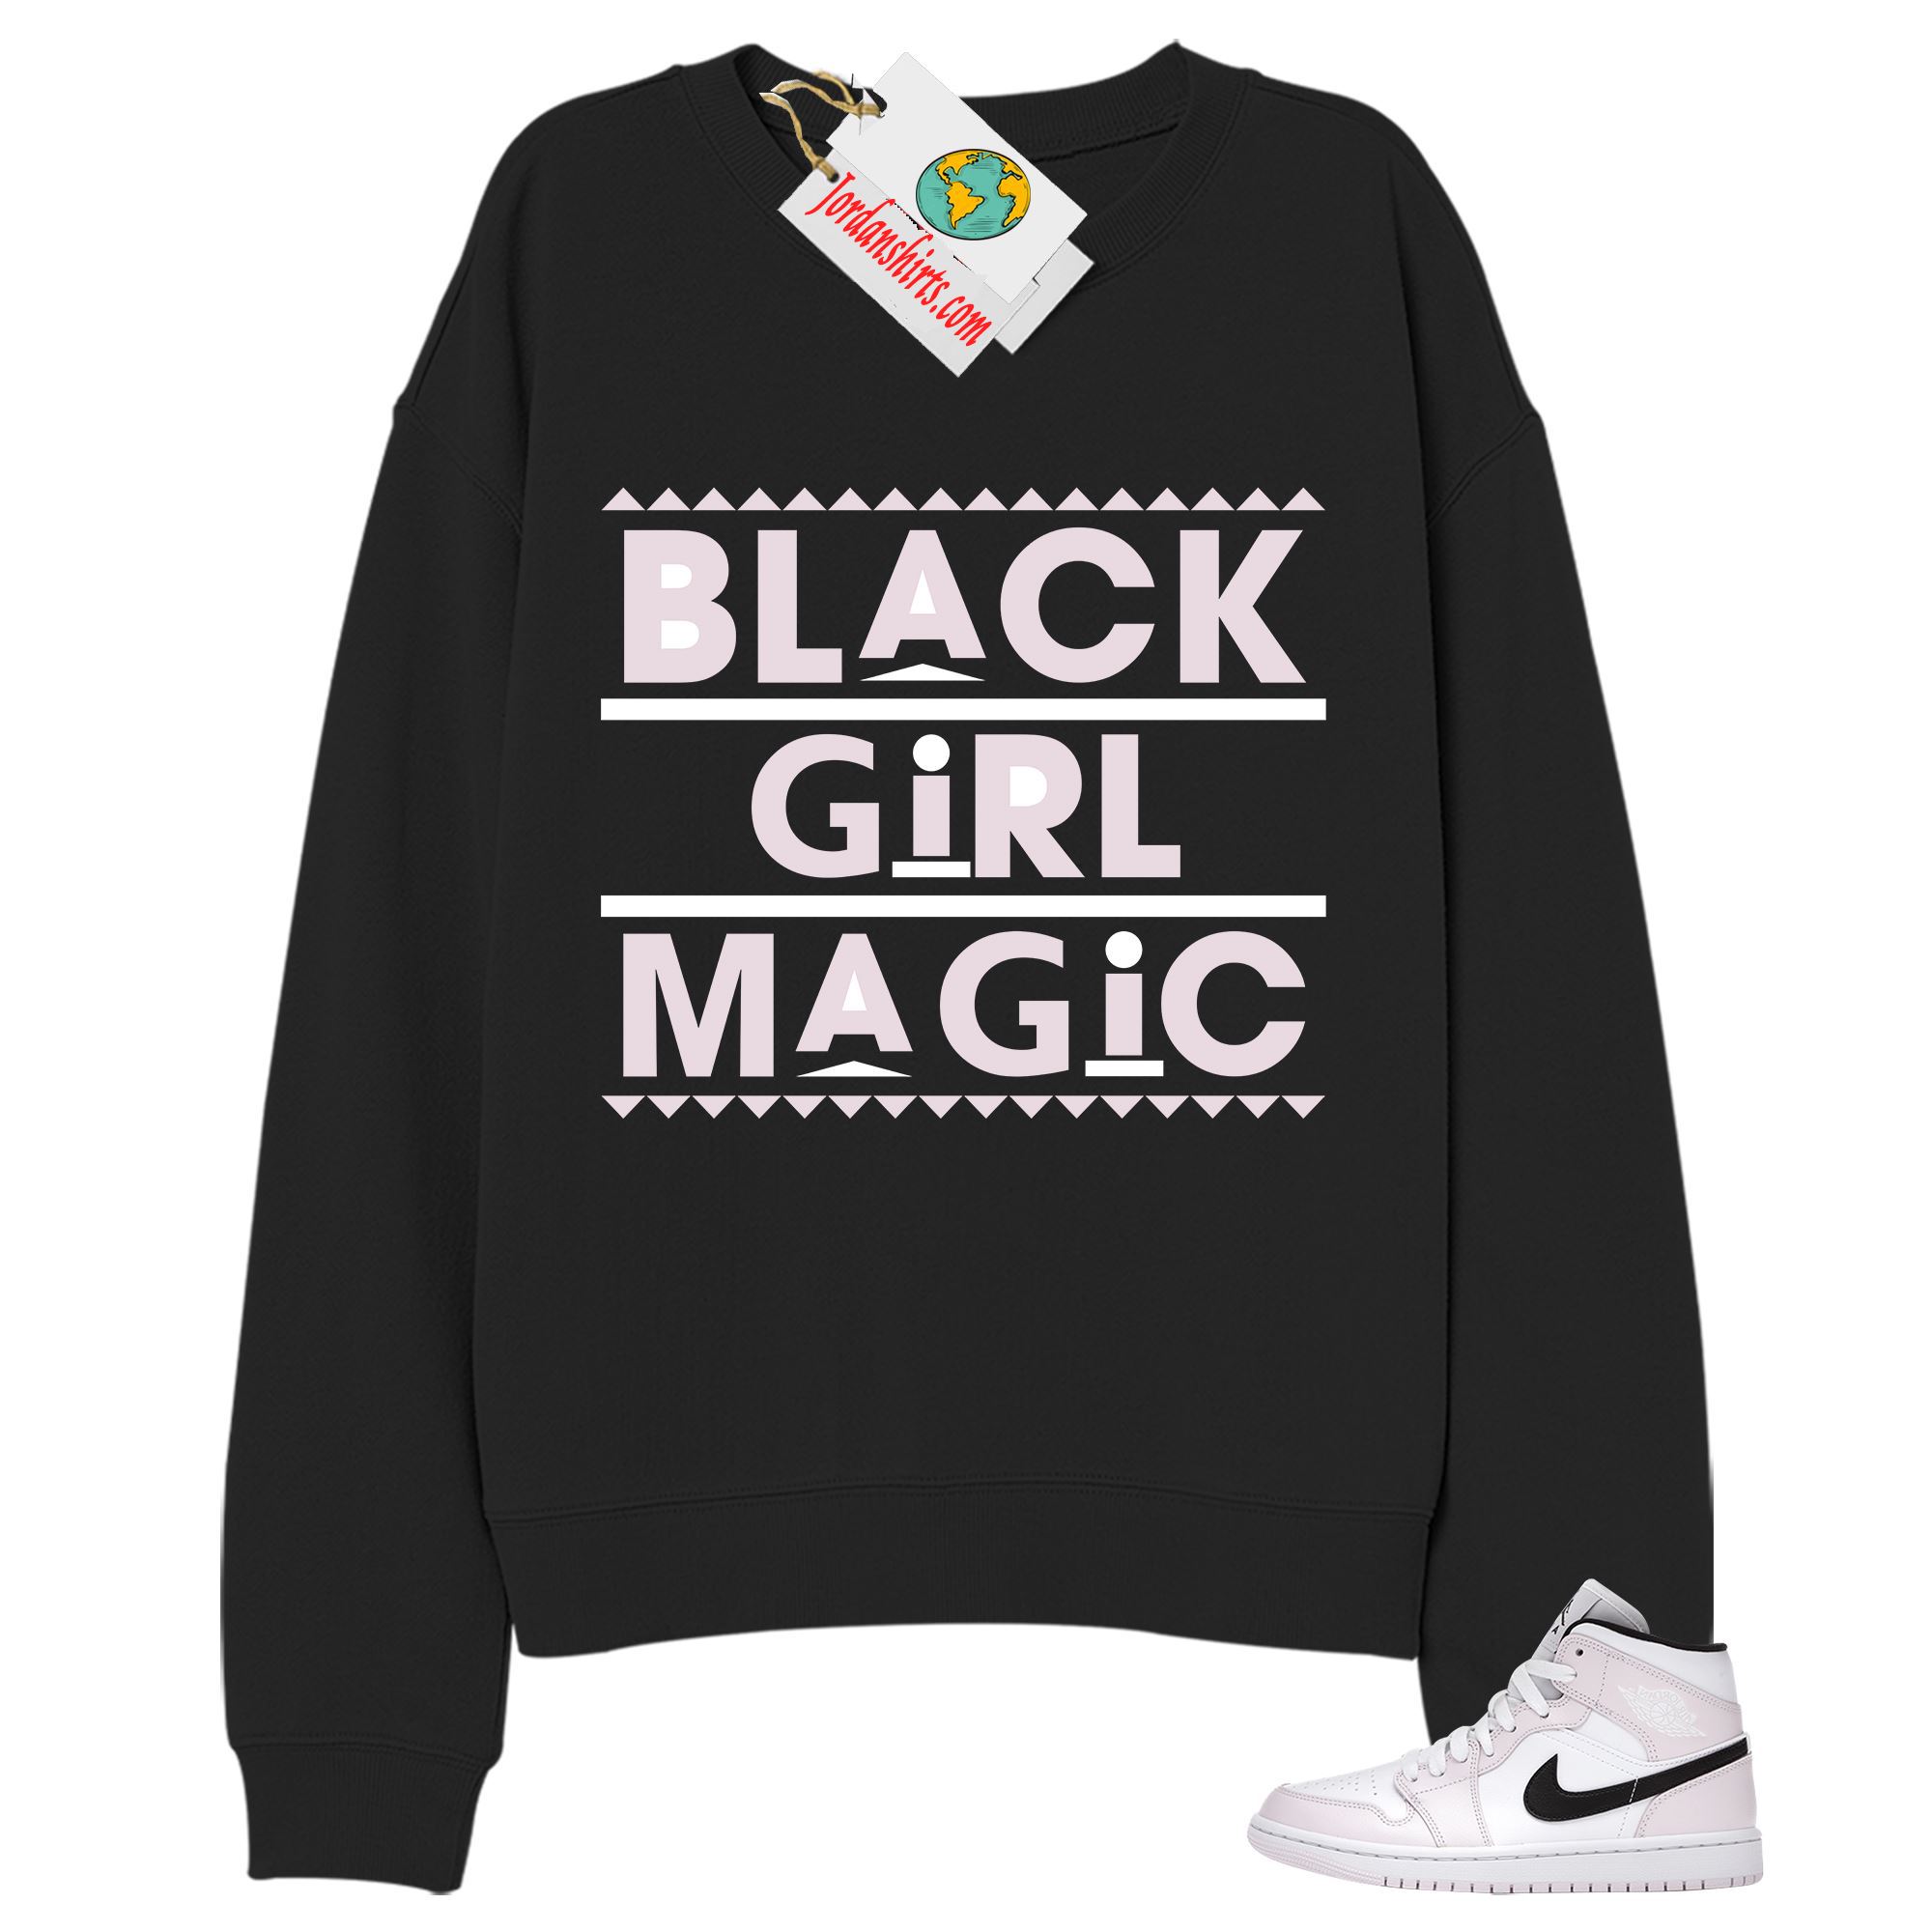 Jordan 1 Sweatshirt, Black Girl Magic Black Sweatshirt Air Jordan 1 Barely Rose 1s Size Up To 5xl